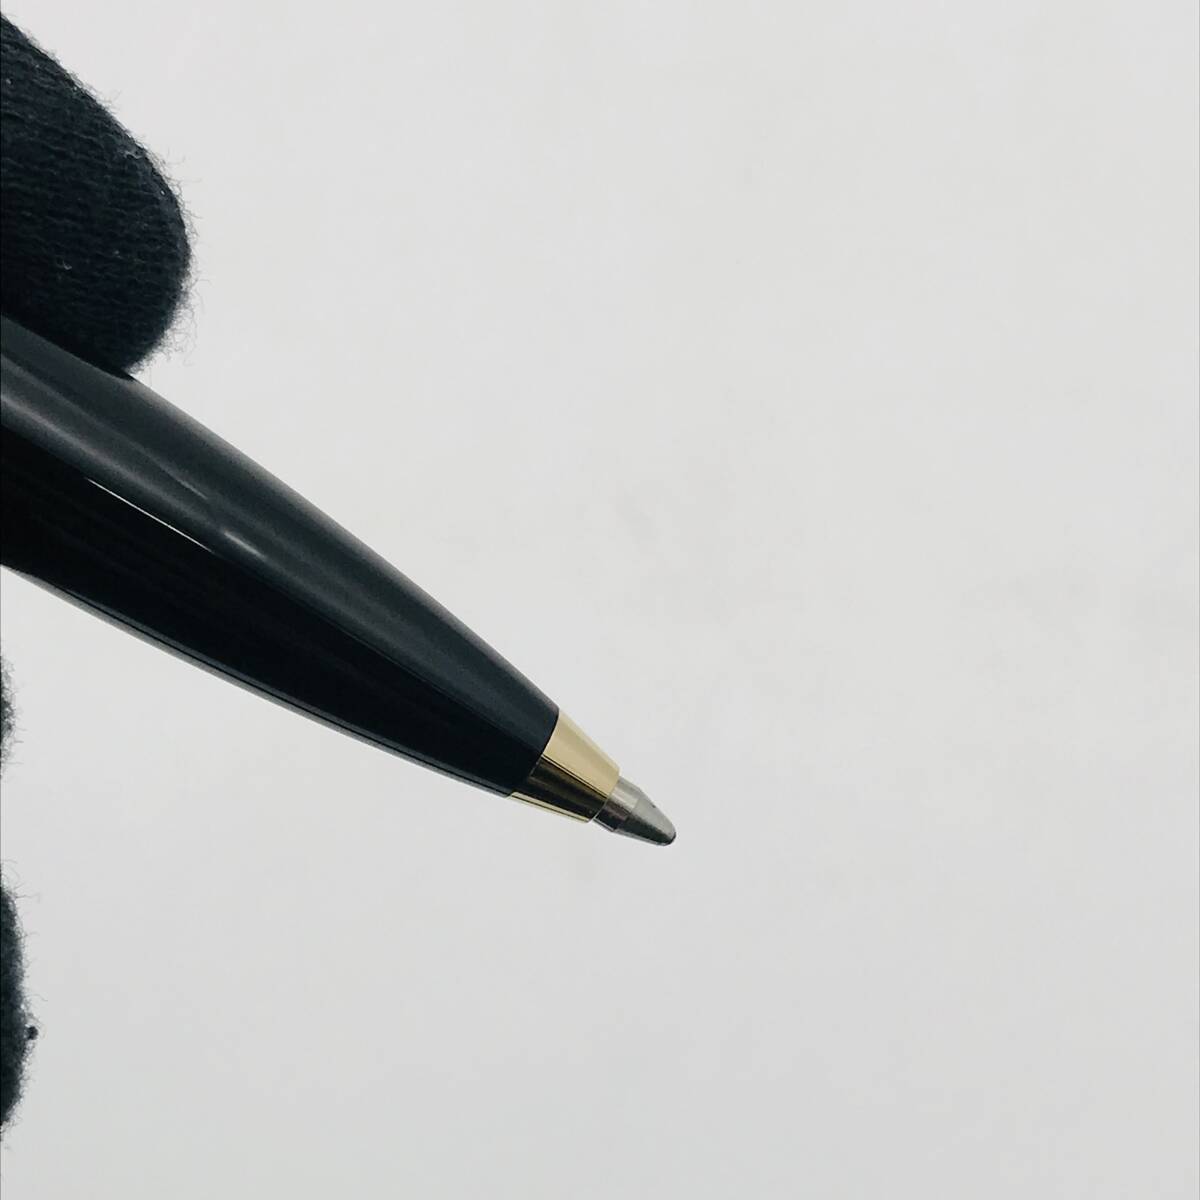 Pelikan пеликан шариковая ручка Hsu .- Len knock тип б/у 